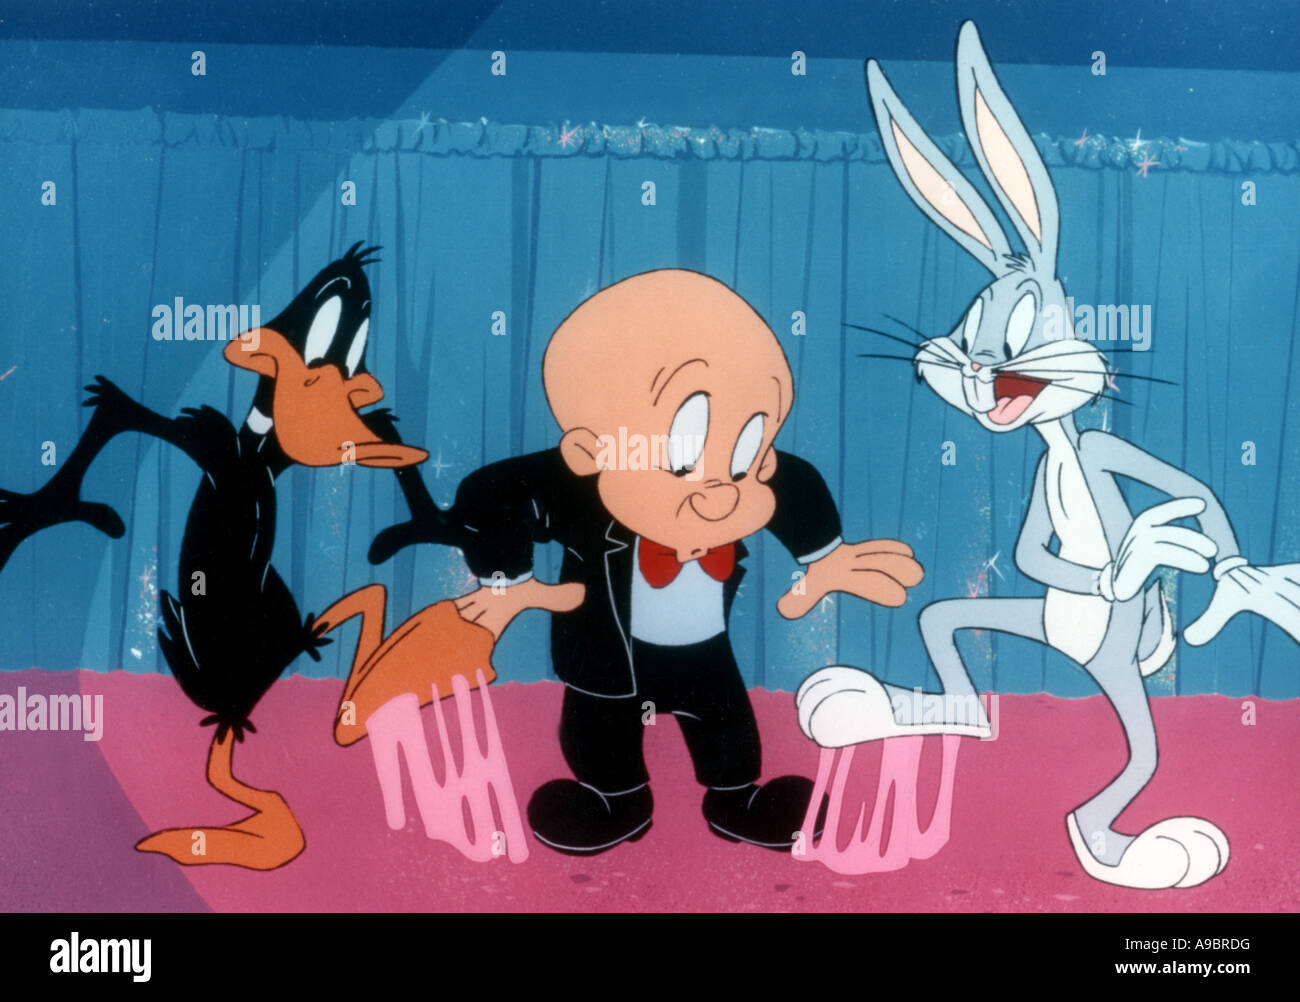 ELMER FUDD - Warner personnage ici avec Bugs Bunny et Daffy Duck Banque D'Images